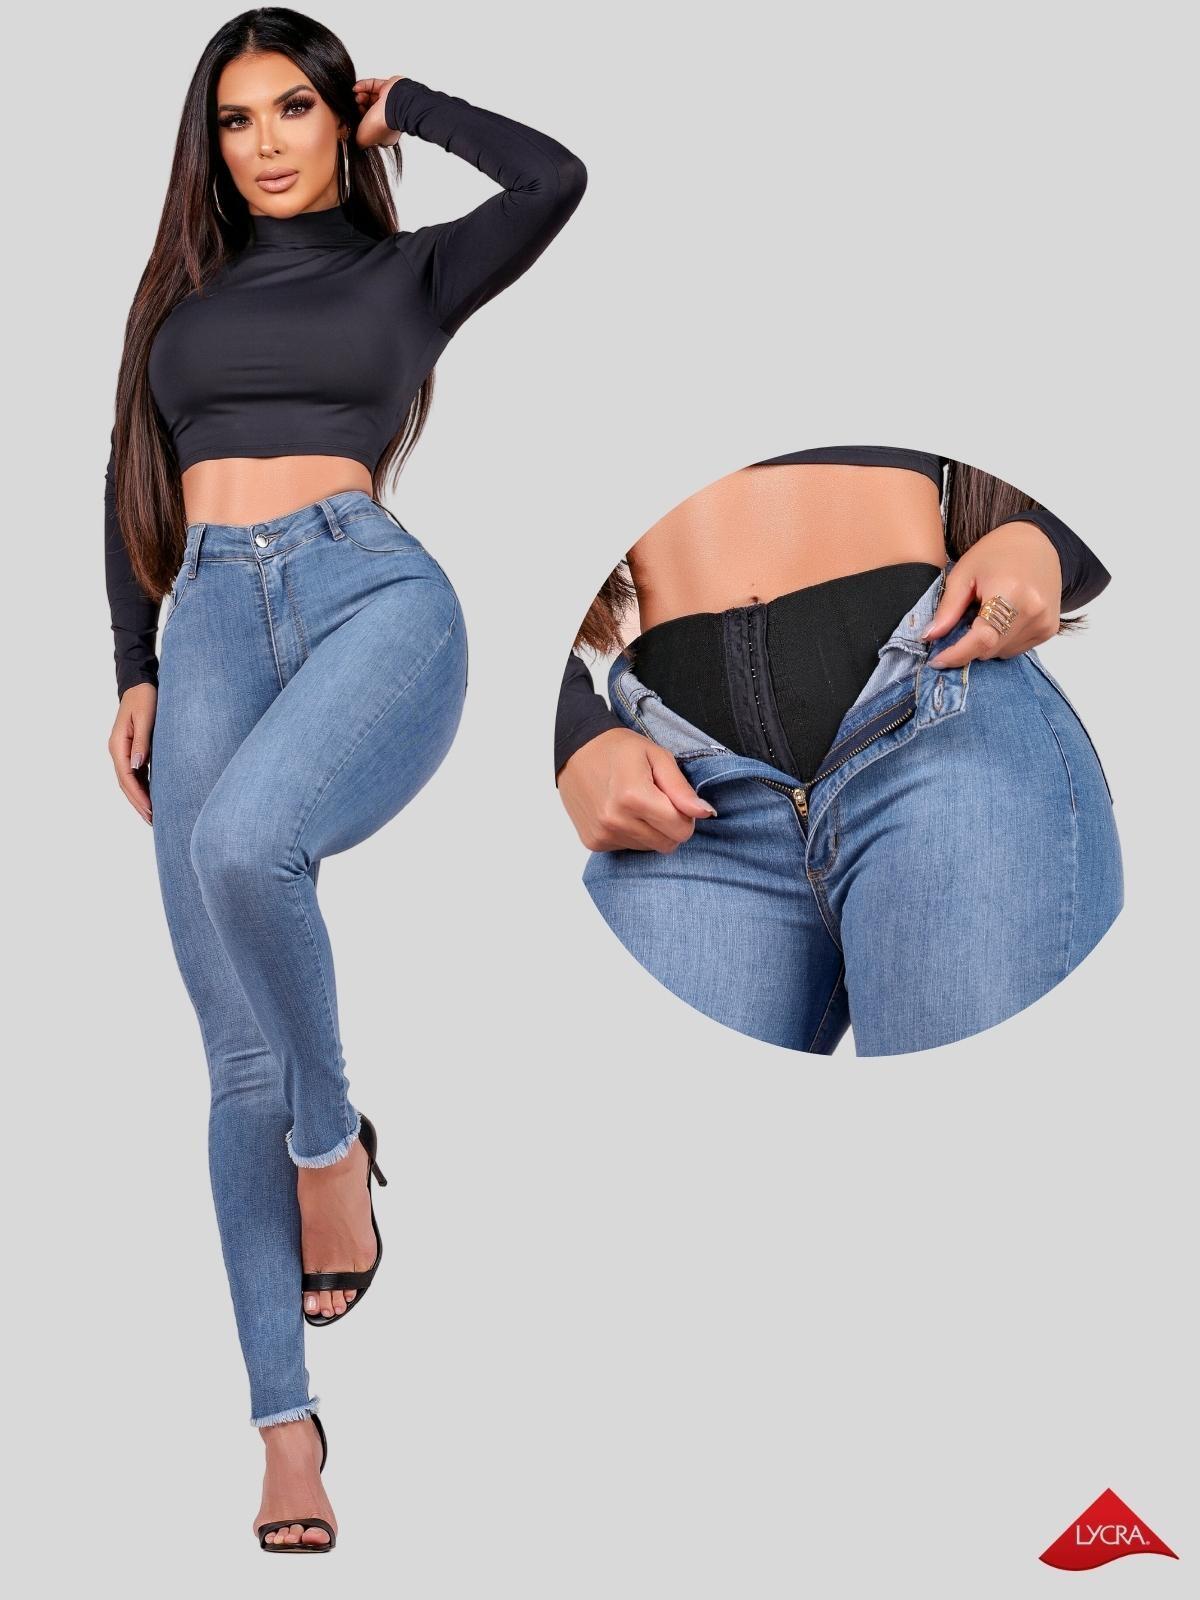 Calça jeans modeladora super lipo flare empina bumbum